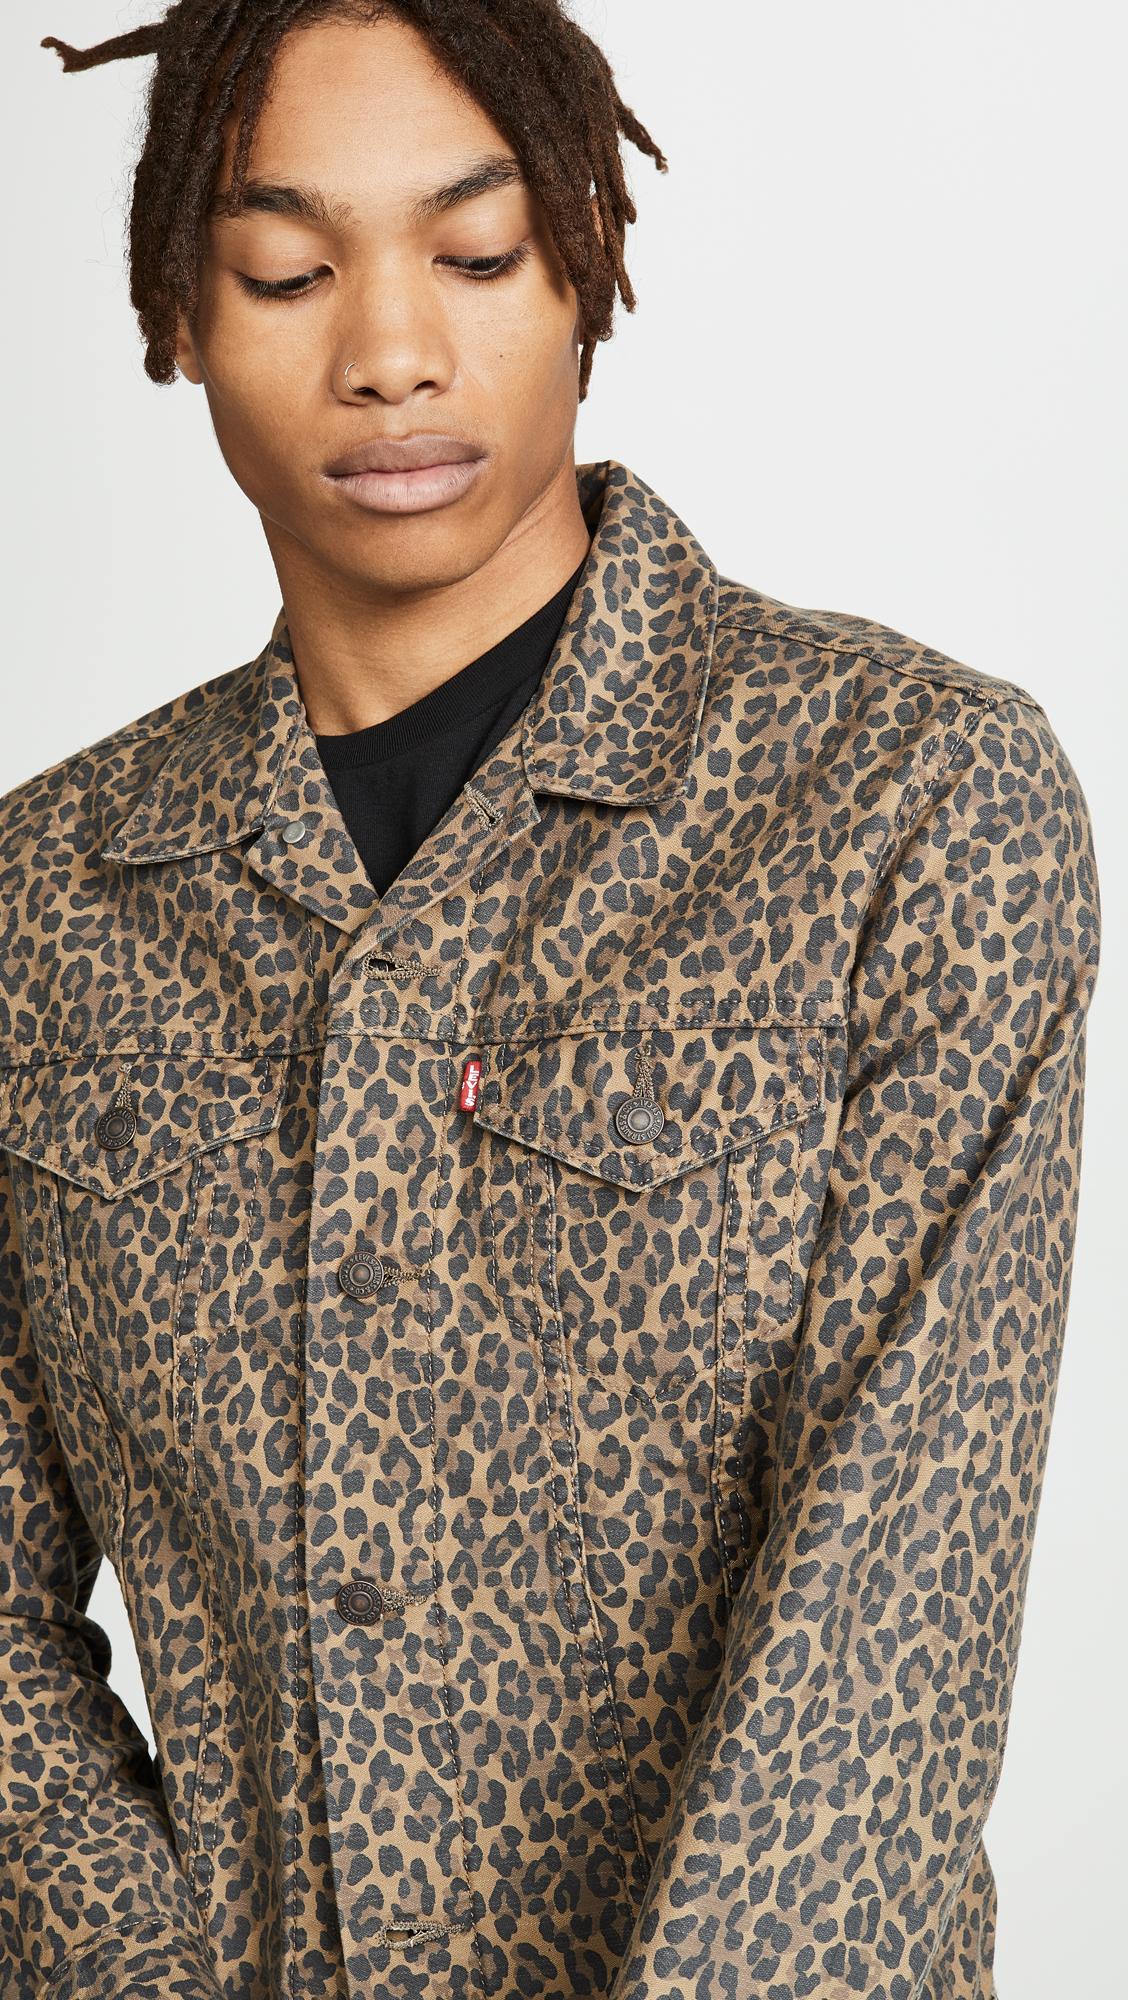 levi's leopard print denim jacket